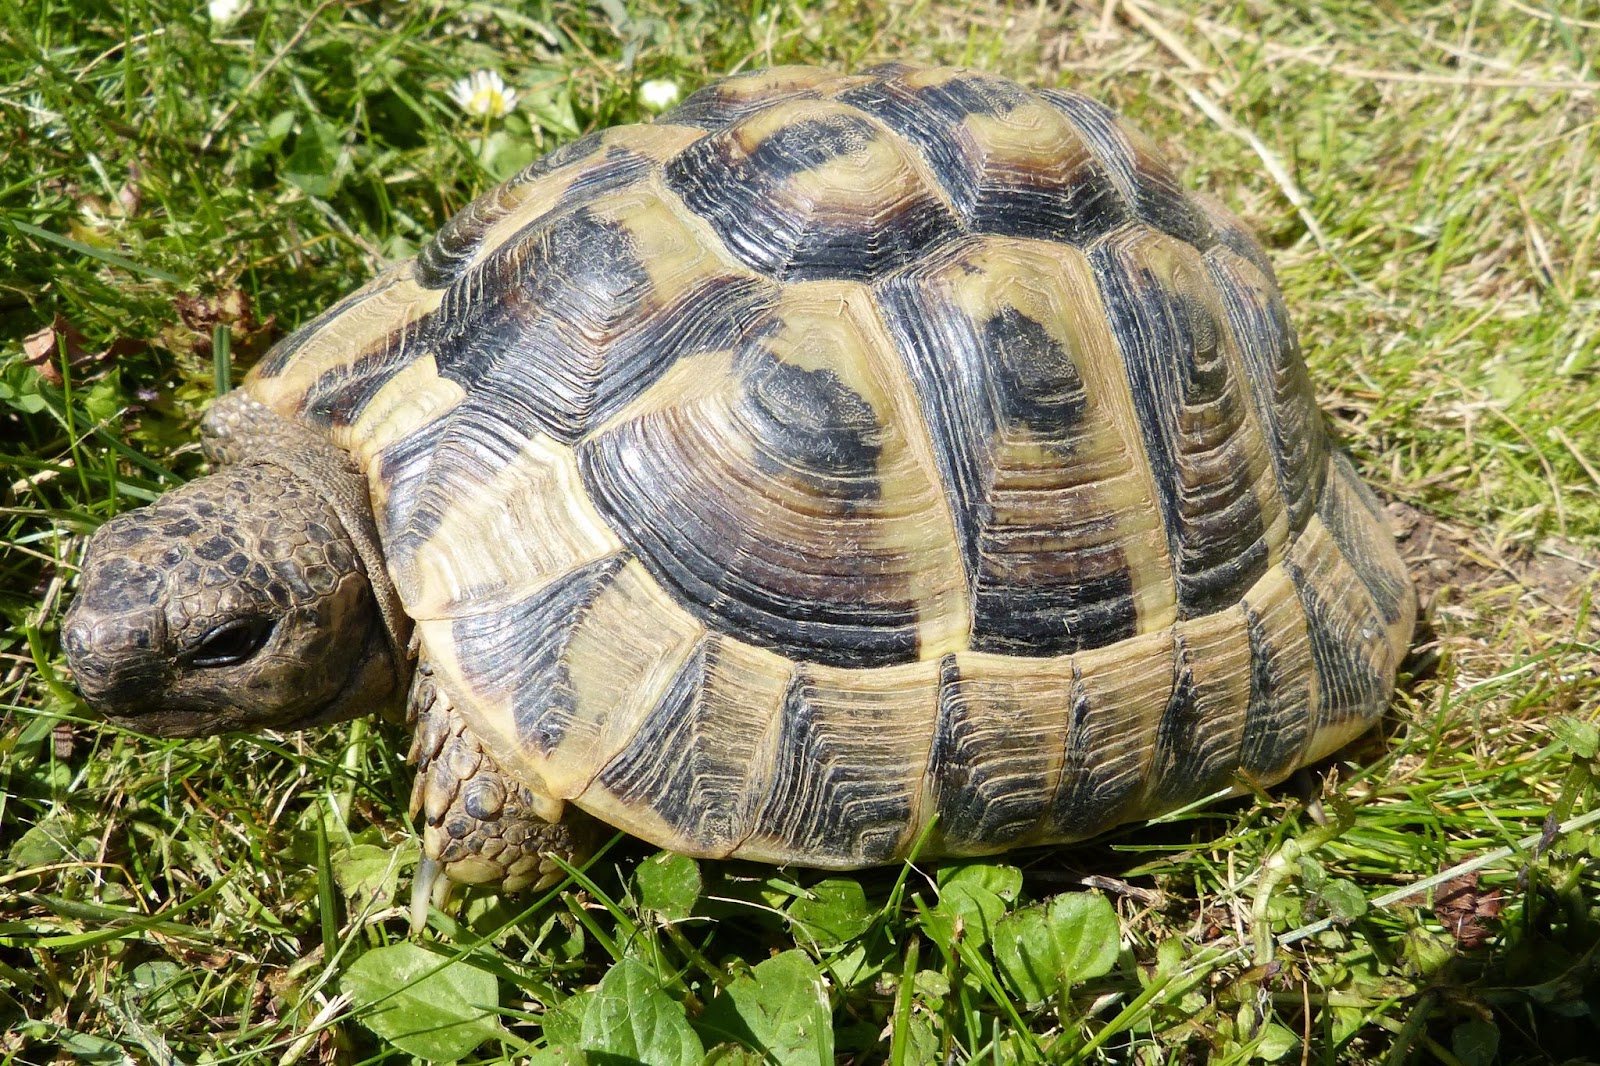 Harmanns Tortoise